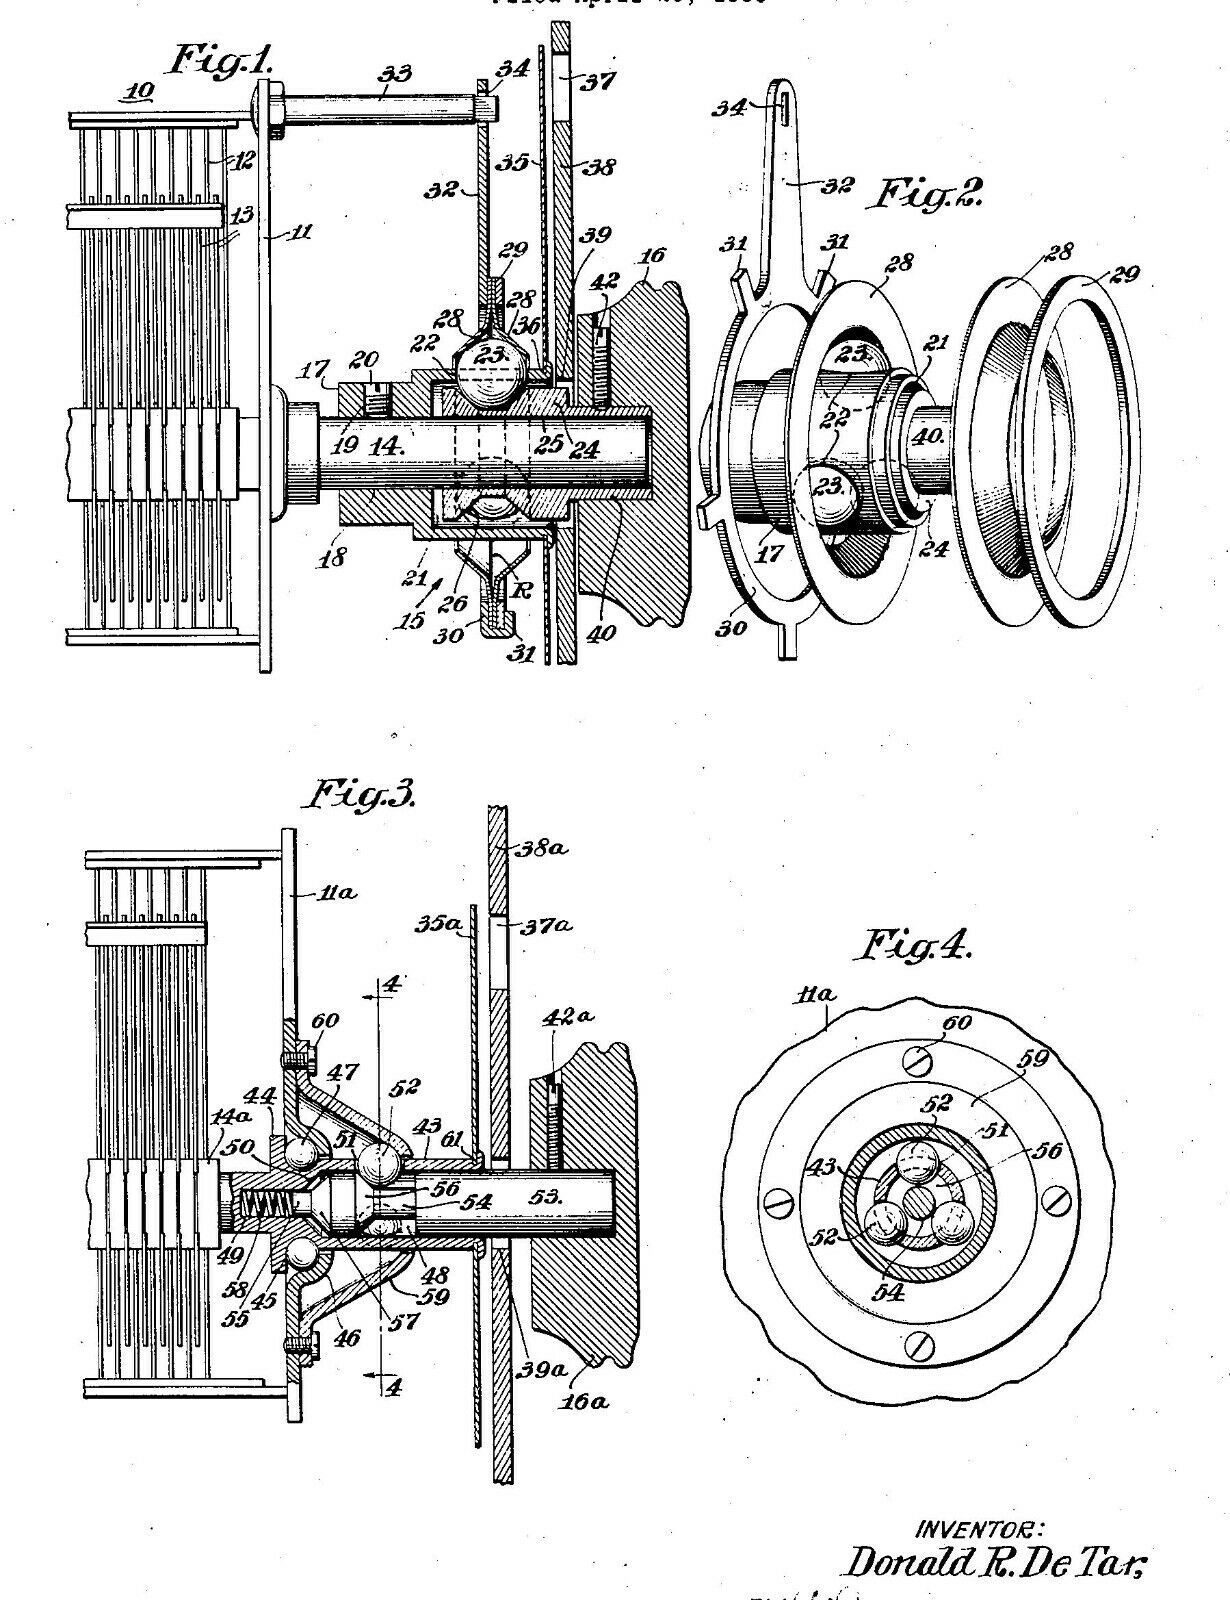 History of RCA 1920-35: receiver, amplifier, loud speaker, phonograph, tube